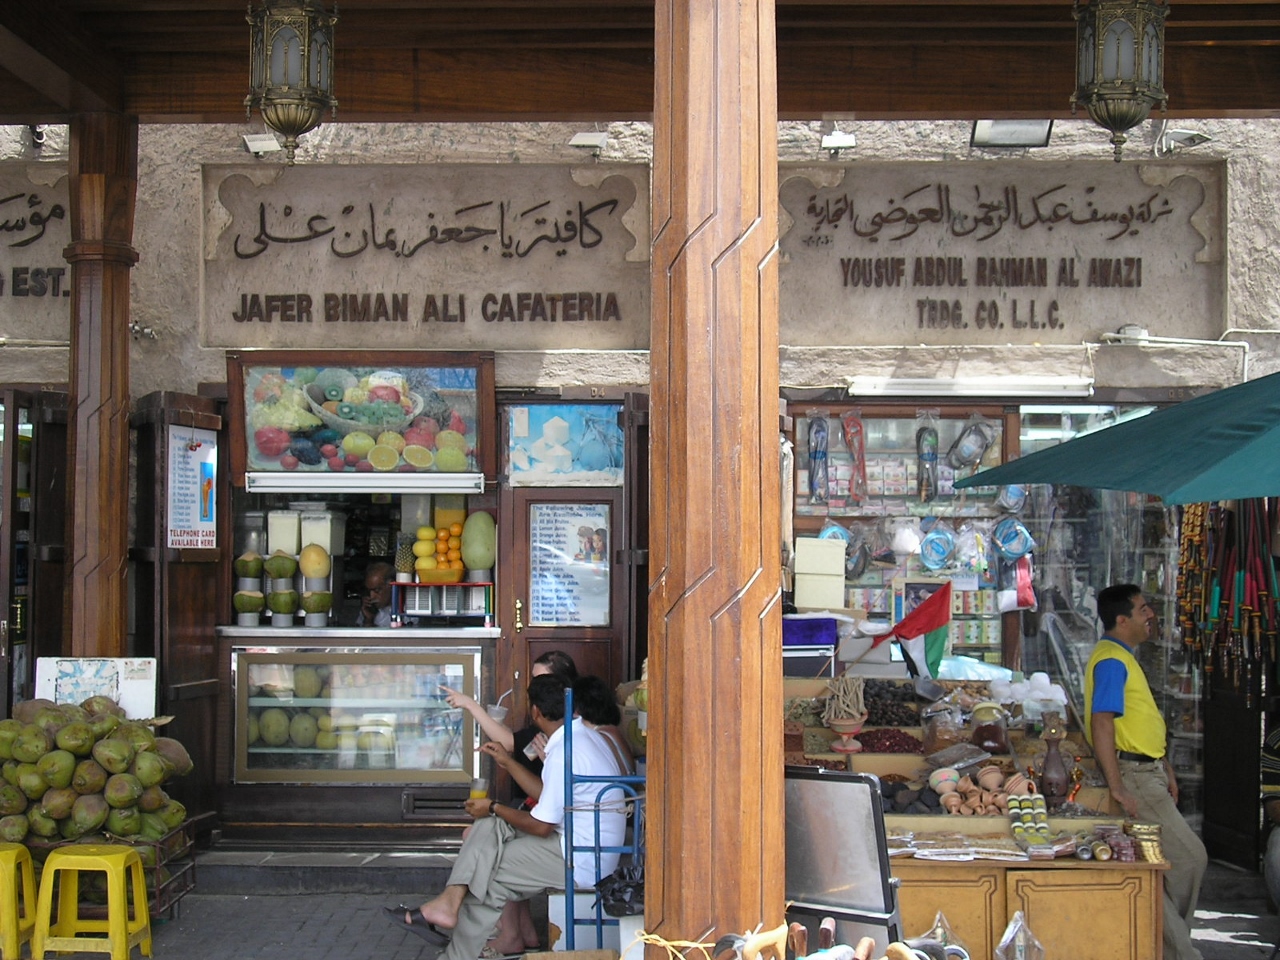 shops in dubai uae jun 2007